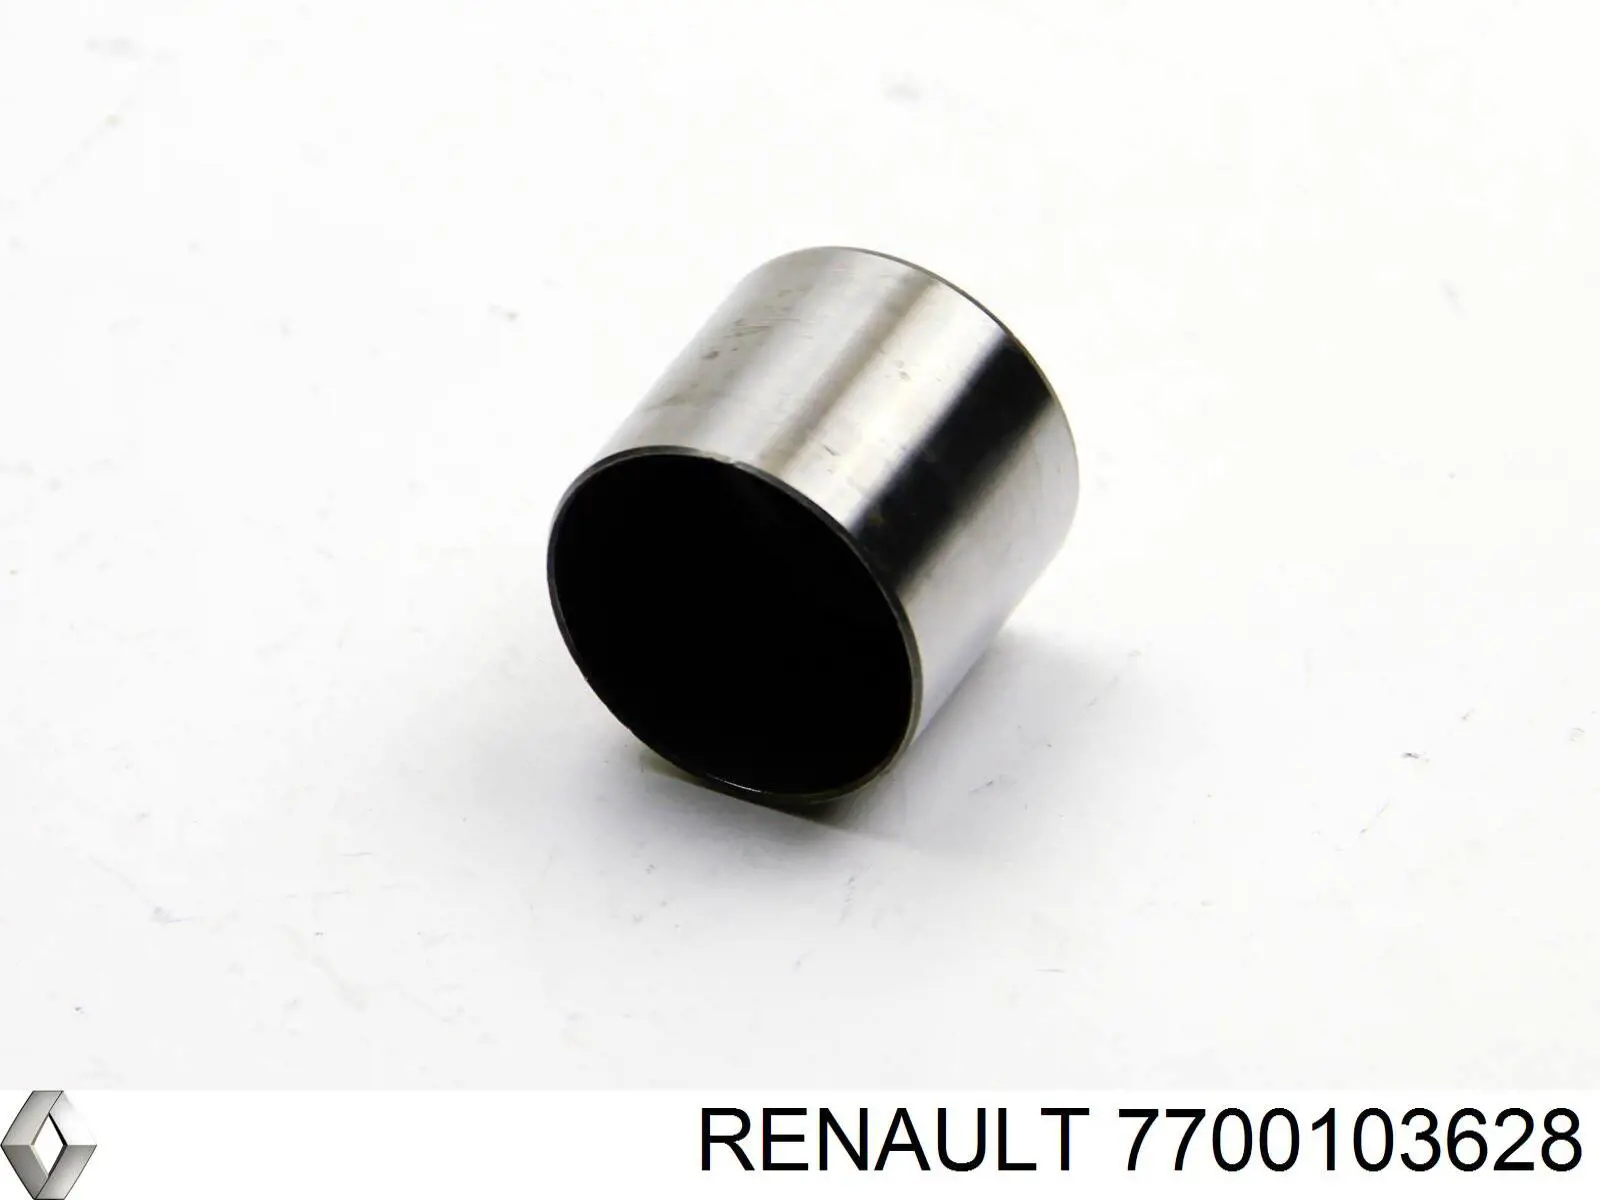 7700103628 Renault (RVI) compensador hidrâulico (empurrador hidrâulico, empurrador de válvulas)